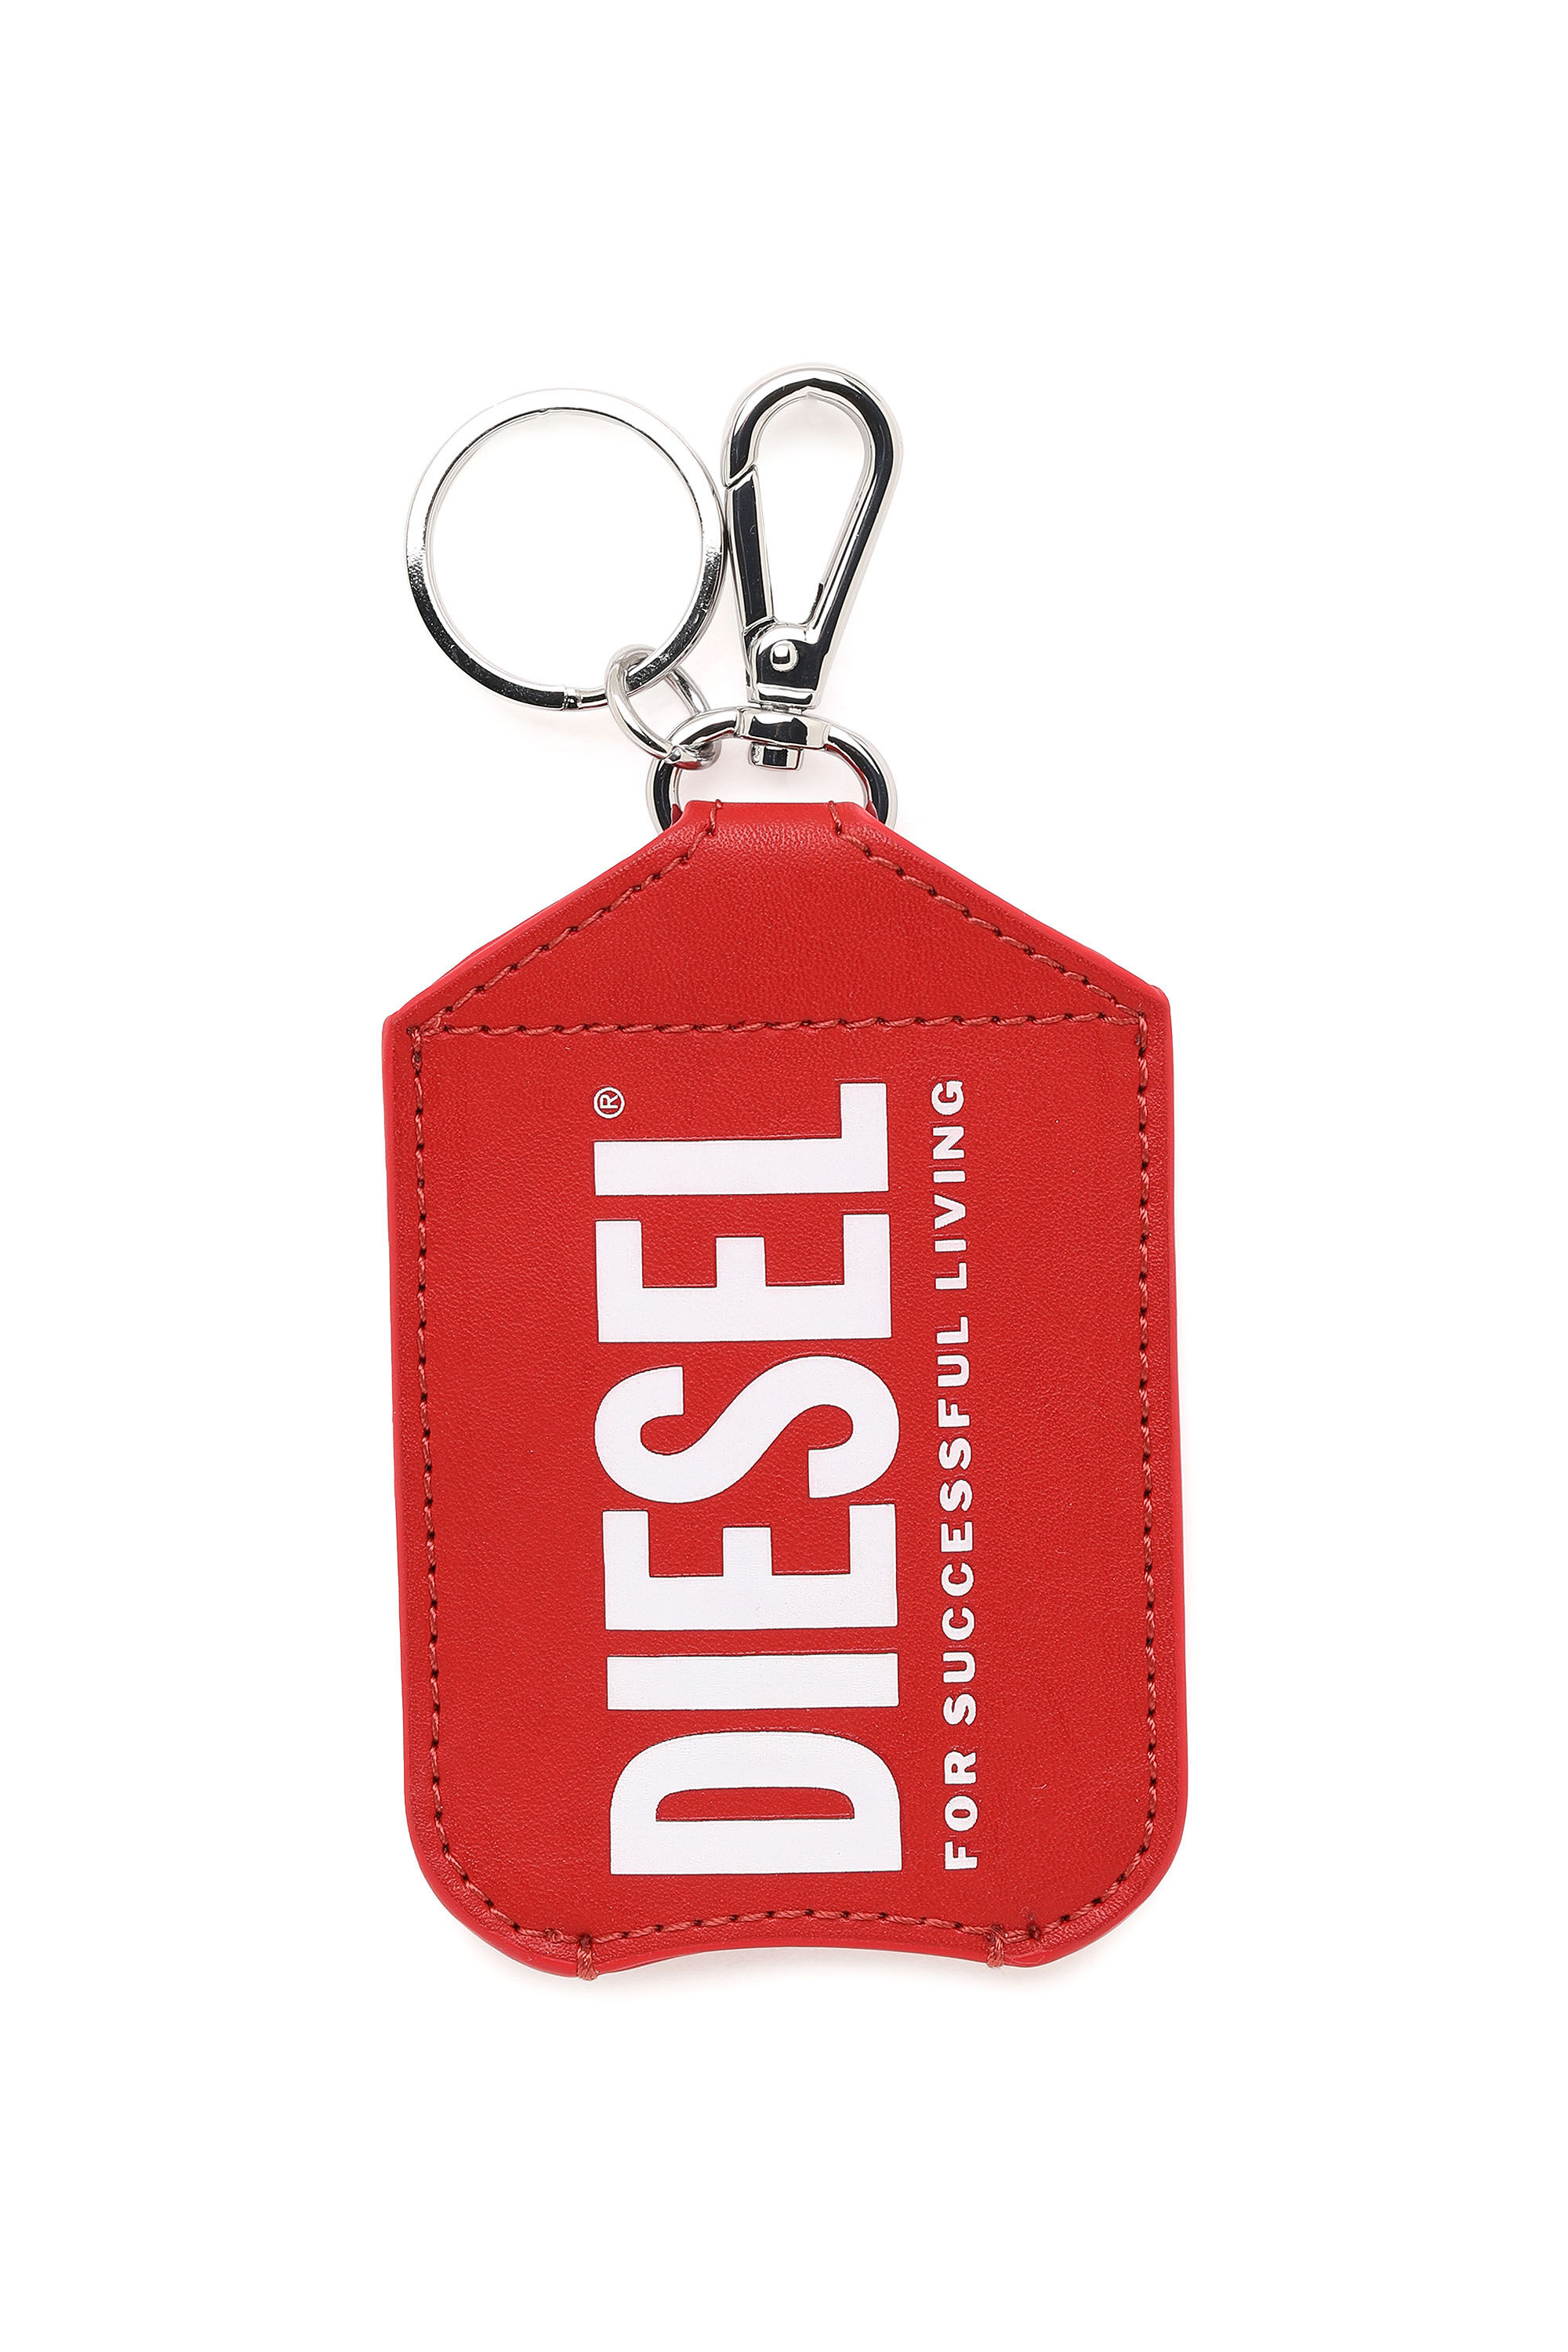 Diesel - TASKBOTTLE, Rojo - Image 1